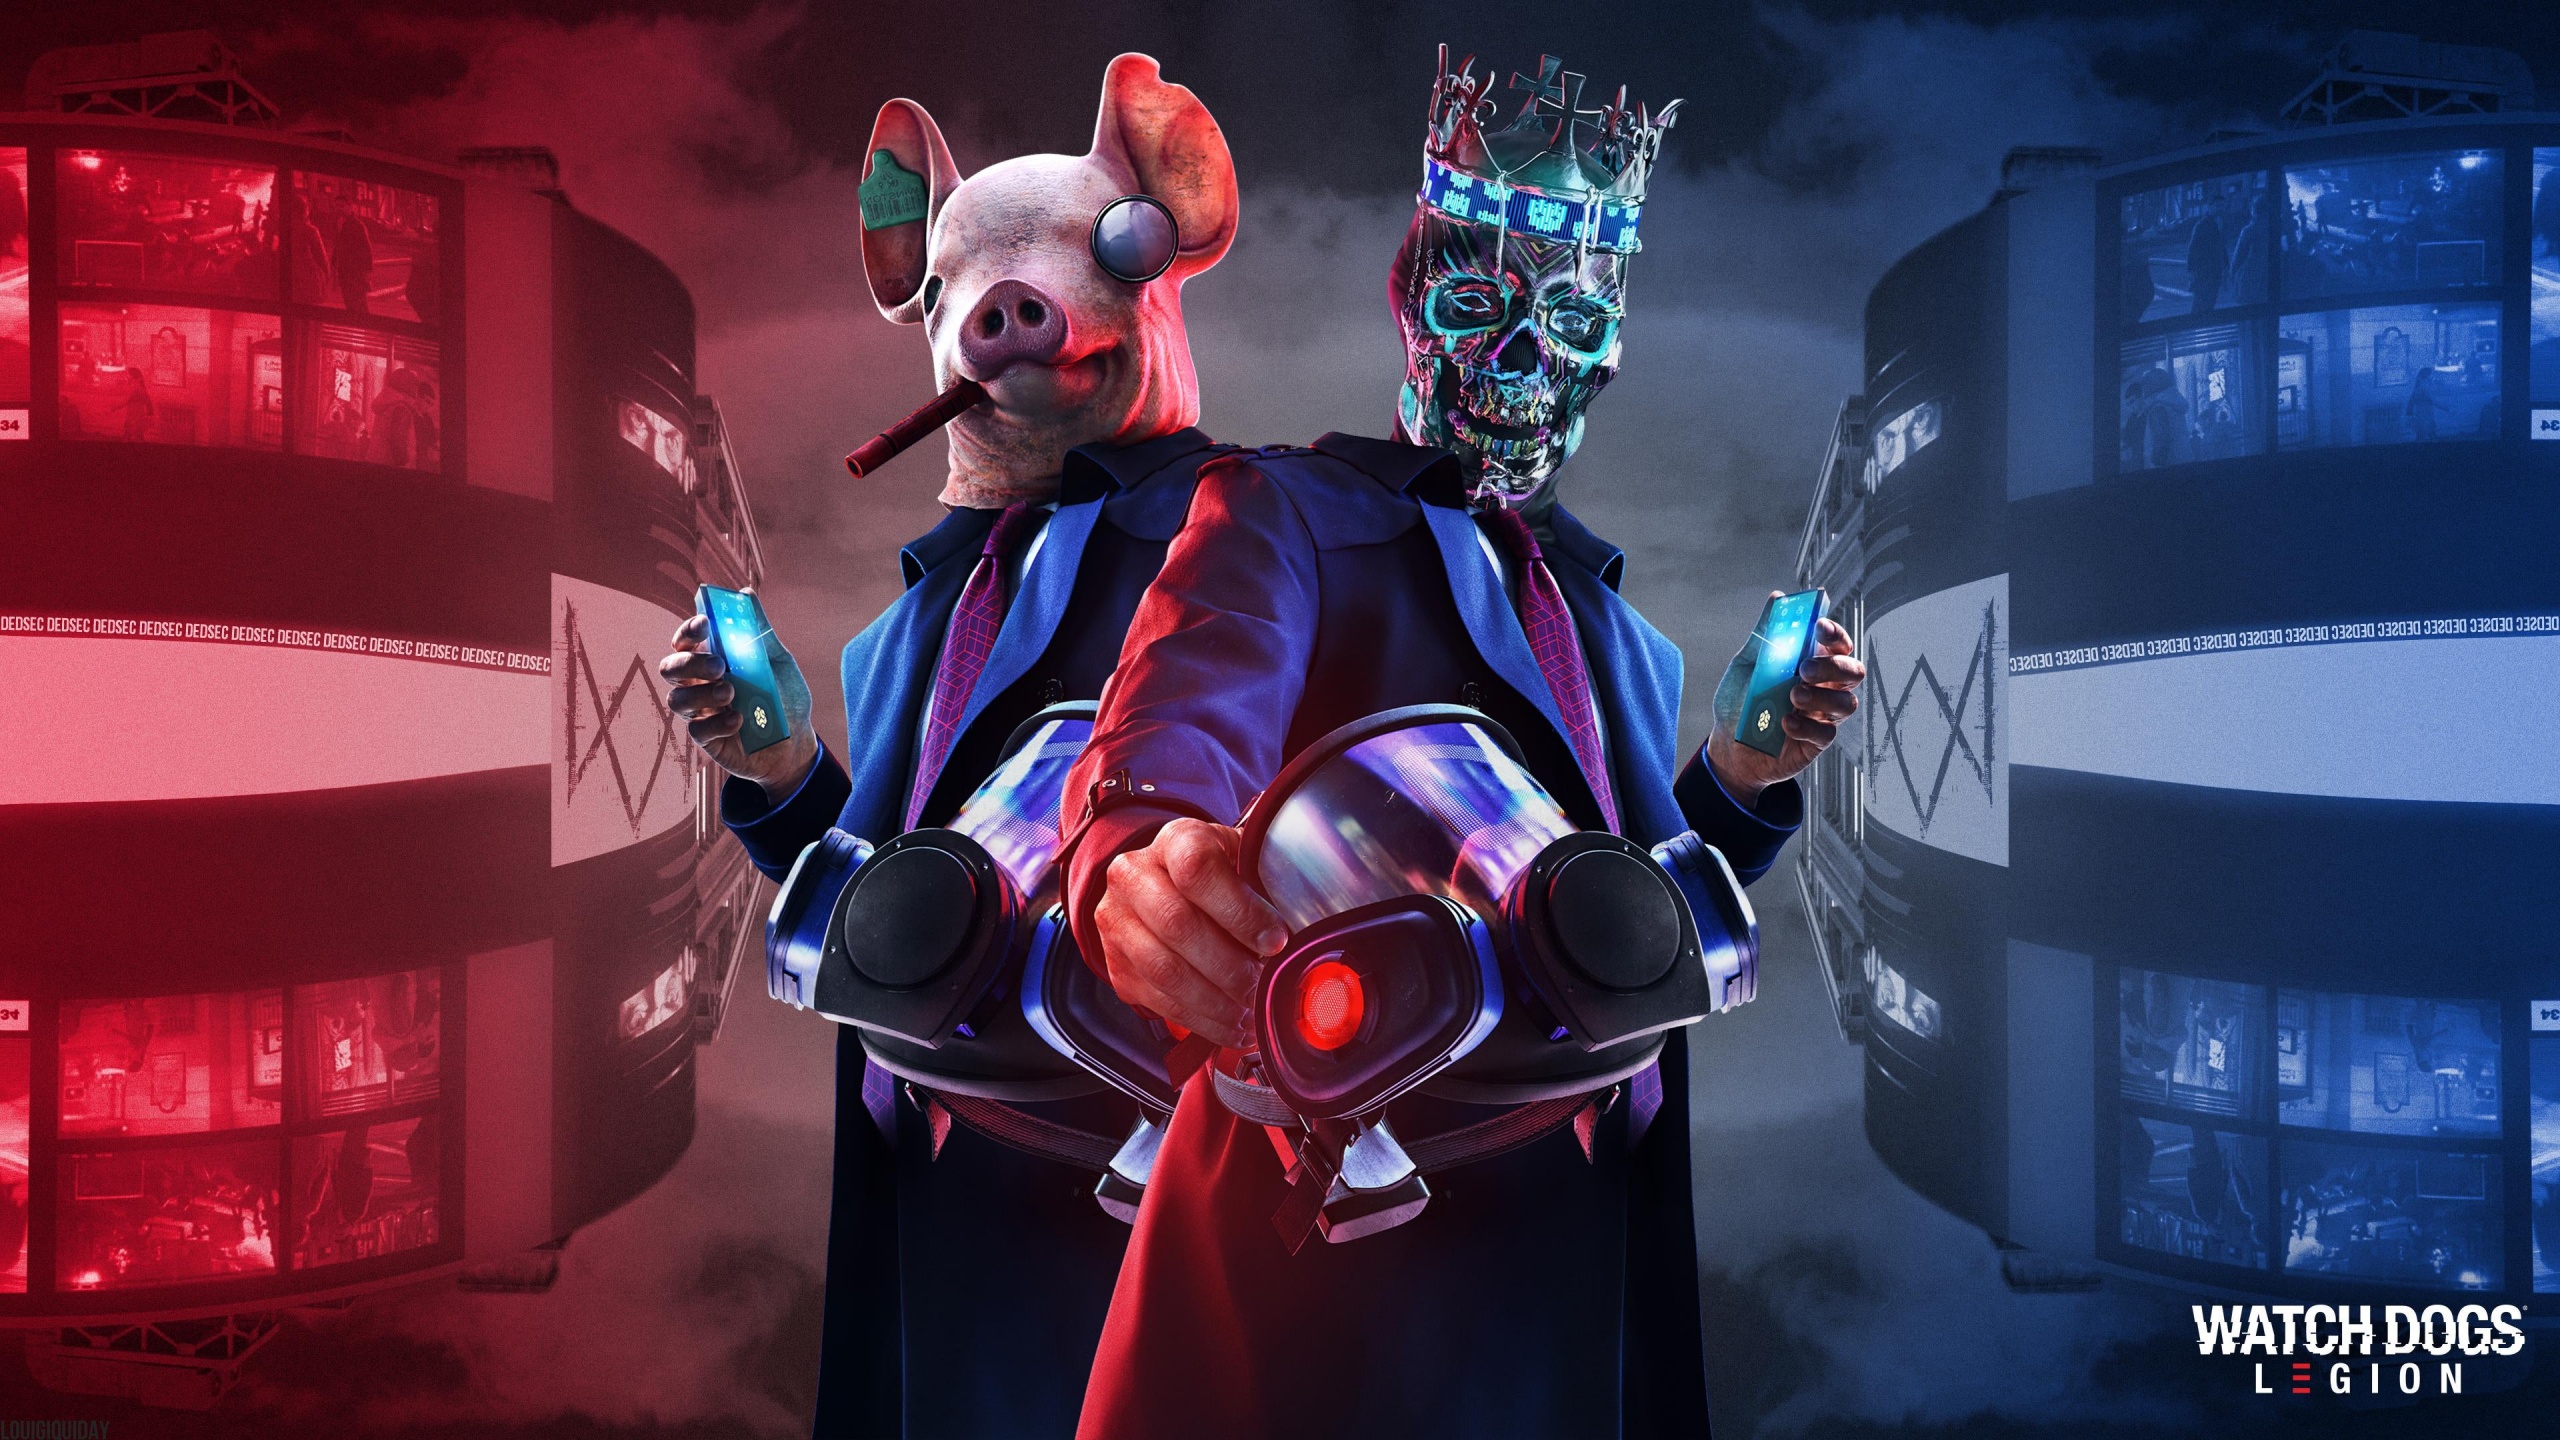 Watch Dogs: Legion Wallpaper 4K, Ded Coronet Mask, Pig mask